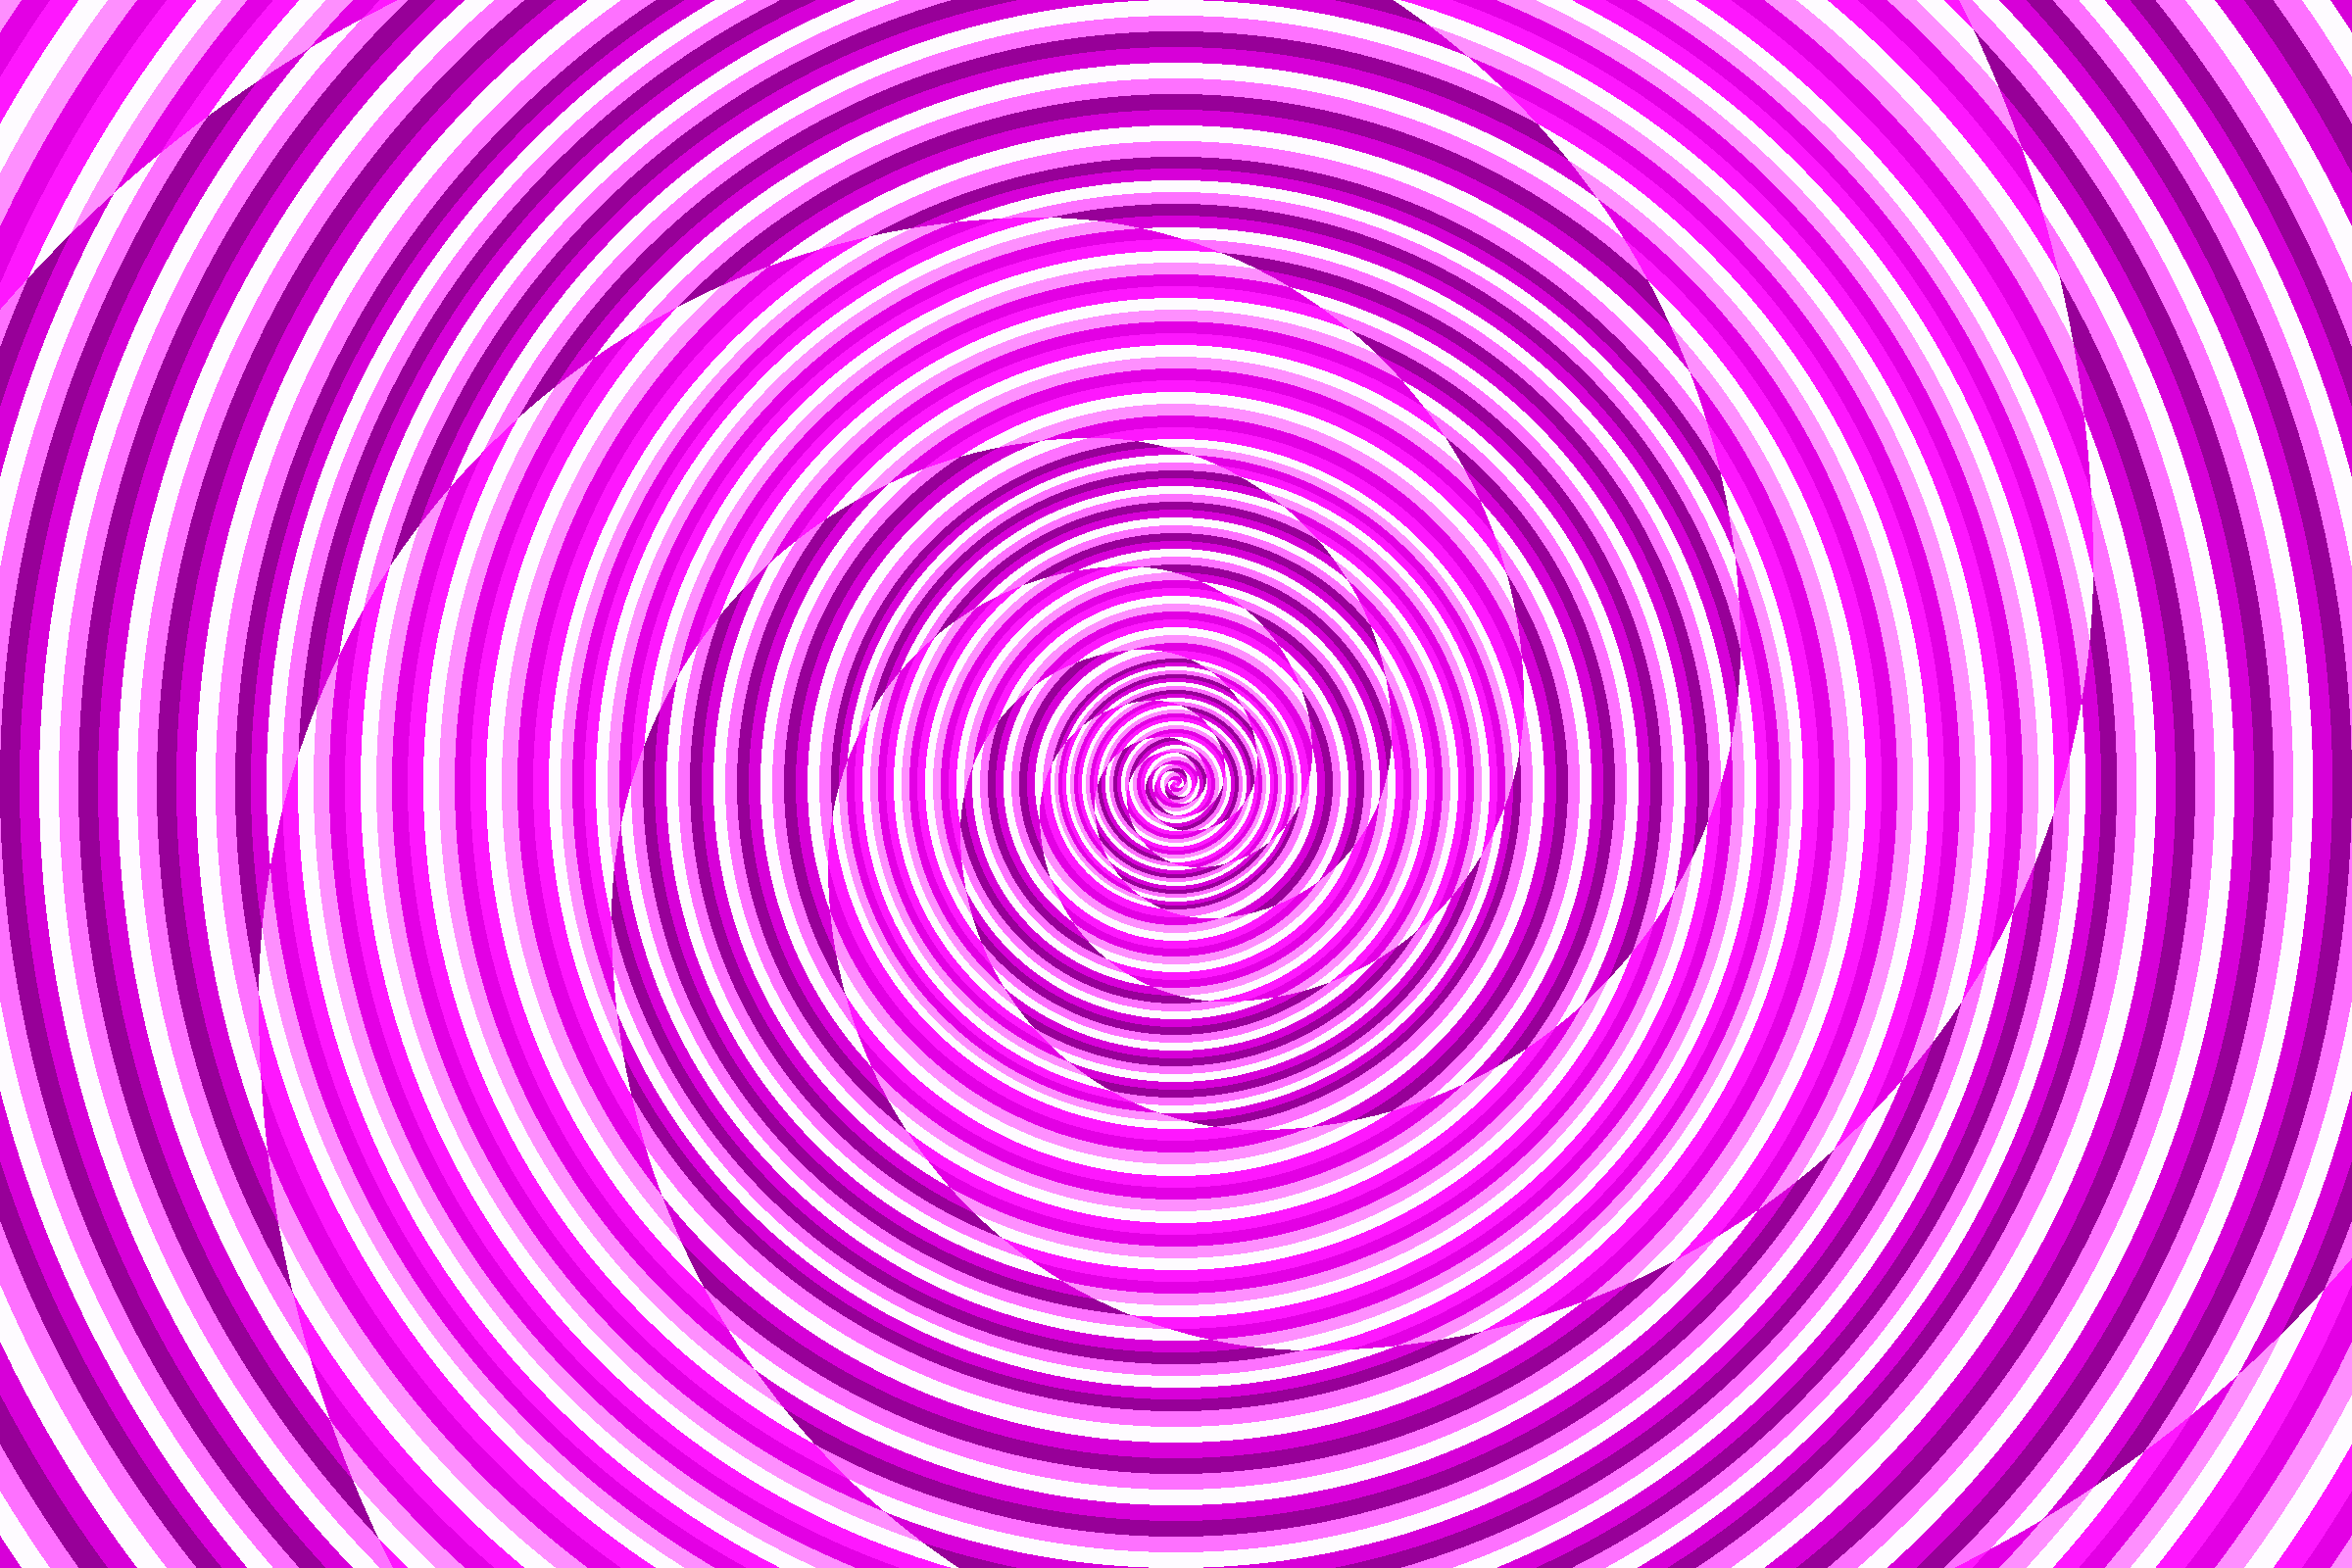 Swirl Screen Golden Spiral Pink Hypnosis Swirl By Demonicclone On.